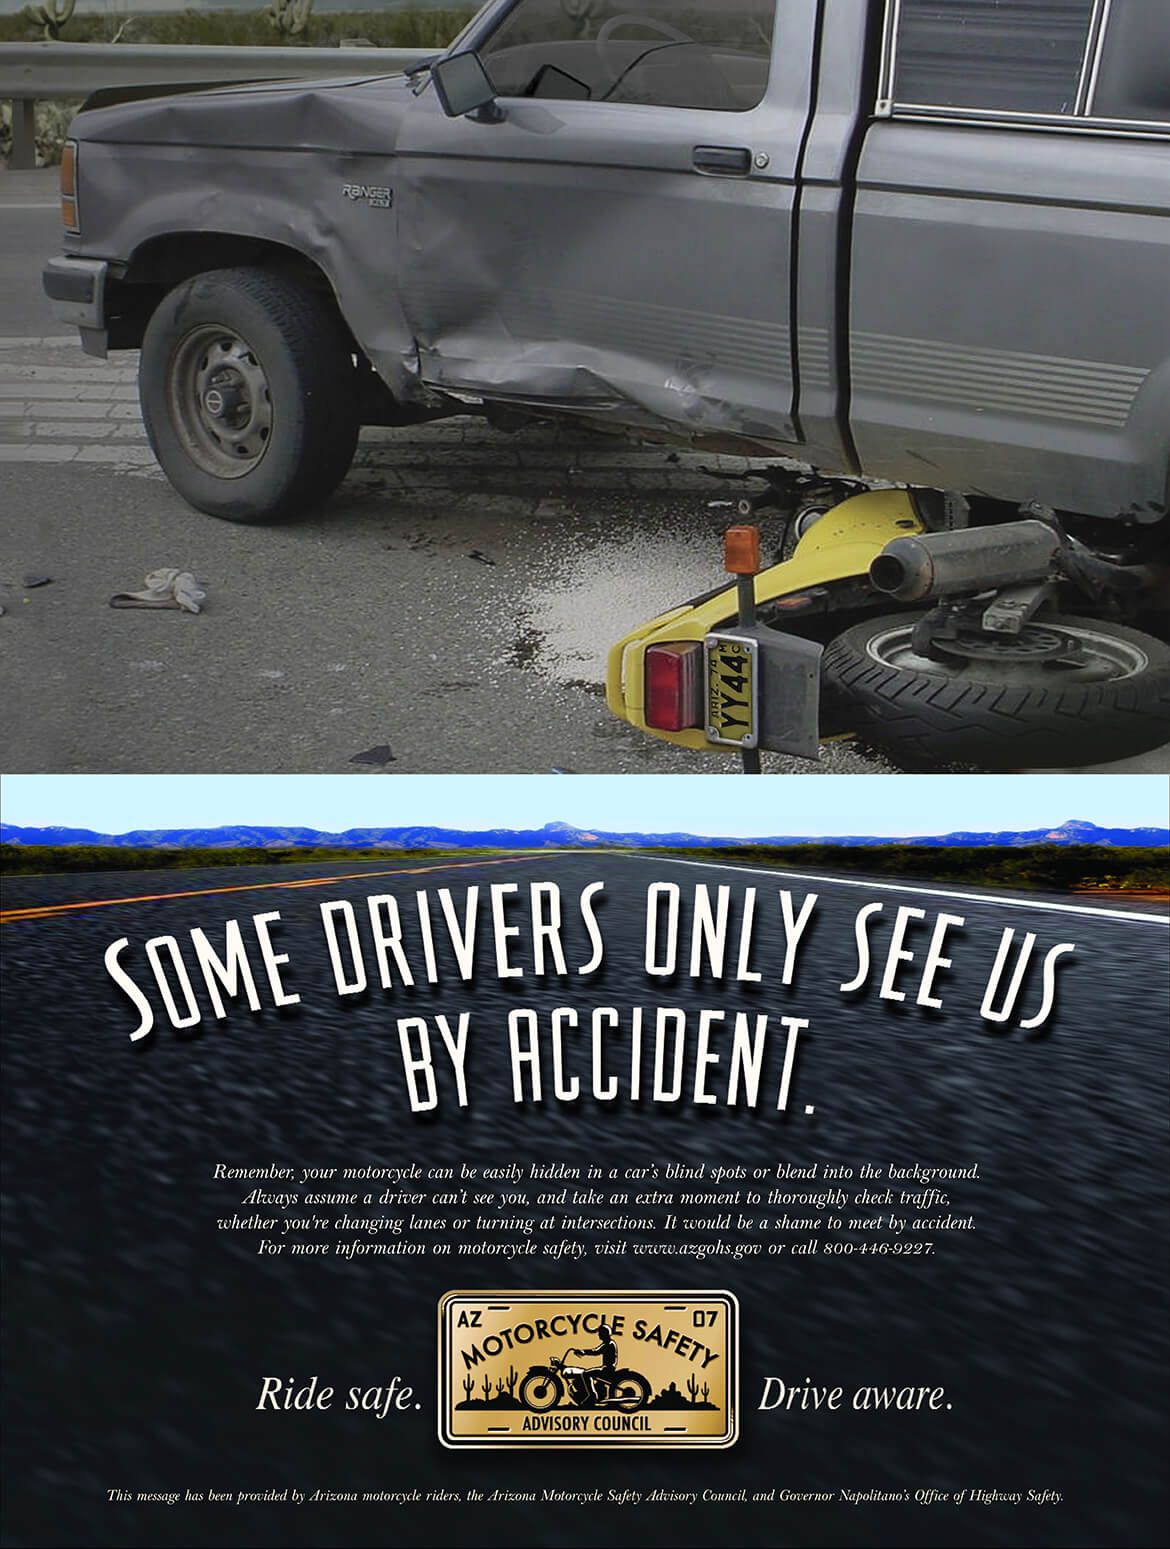 Arizona Motorcycle Safety Advisory Council poster #2